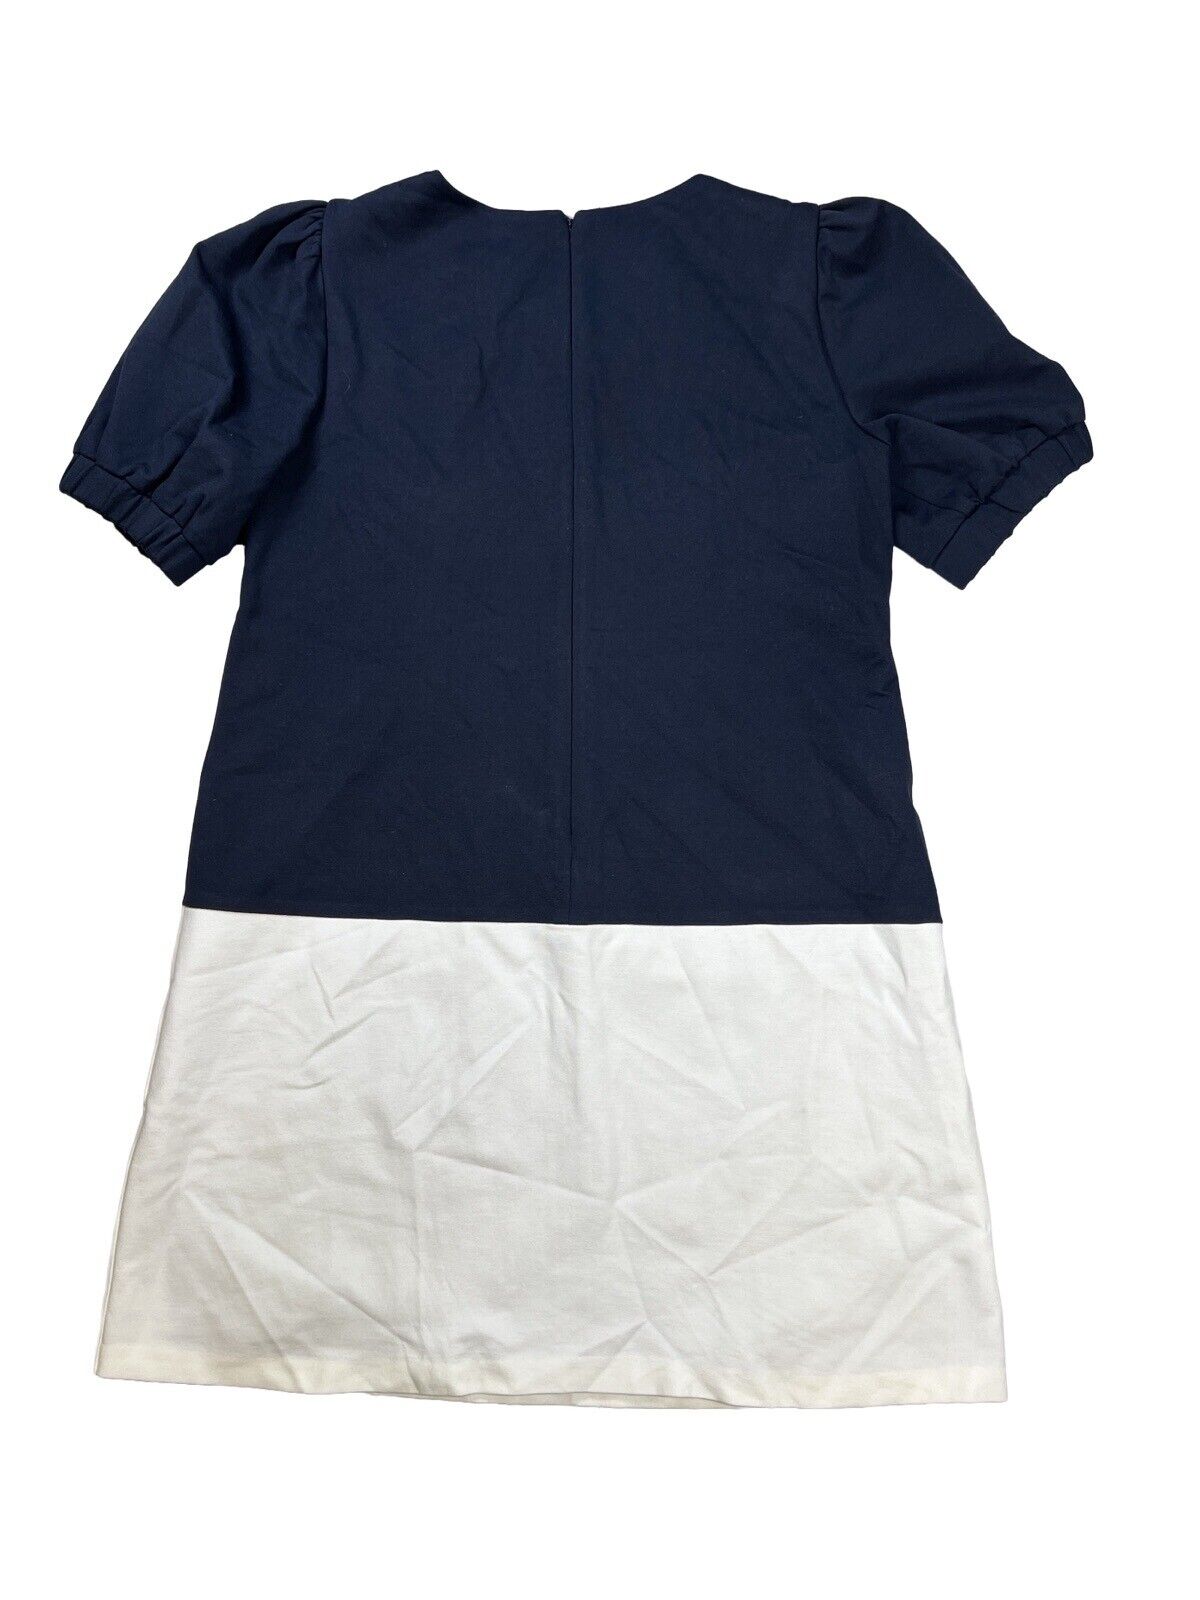 Eliza J Women's Navy Blue Stretch Shift Dress - Petite 12P